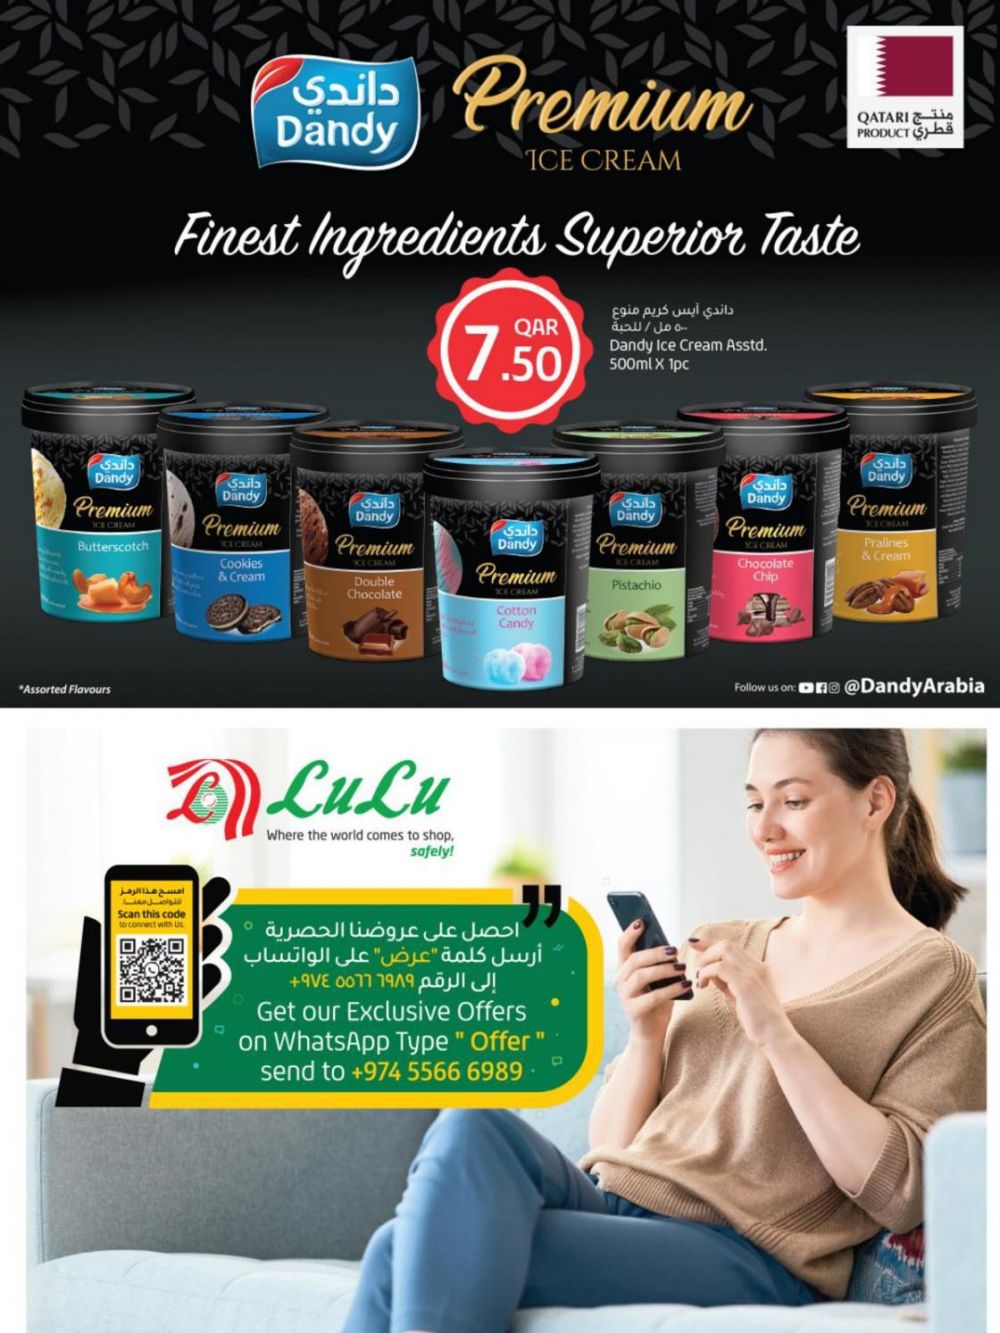 LULU Hypermarket Qatar Offers 2021